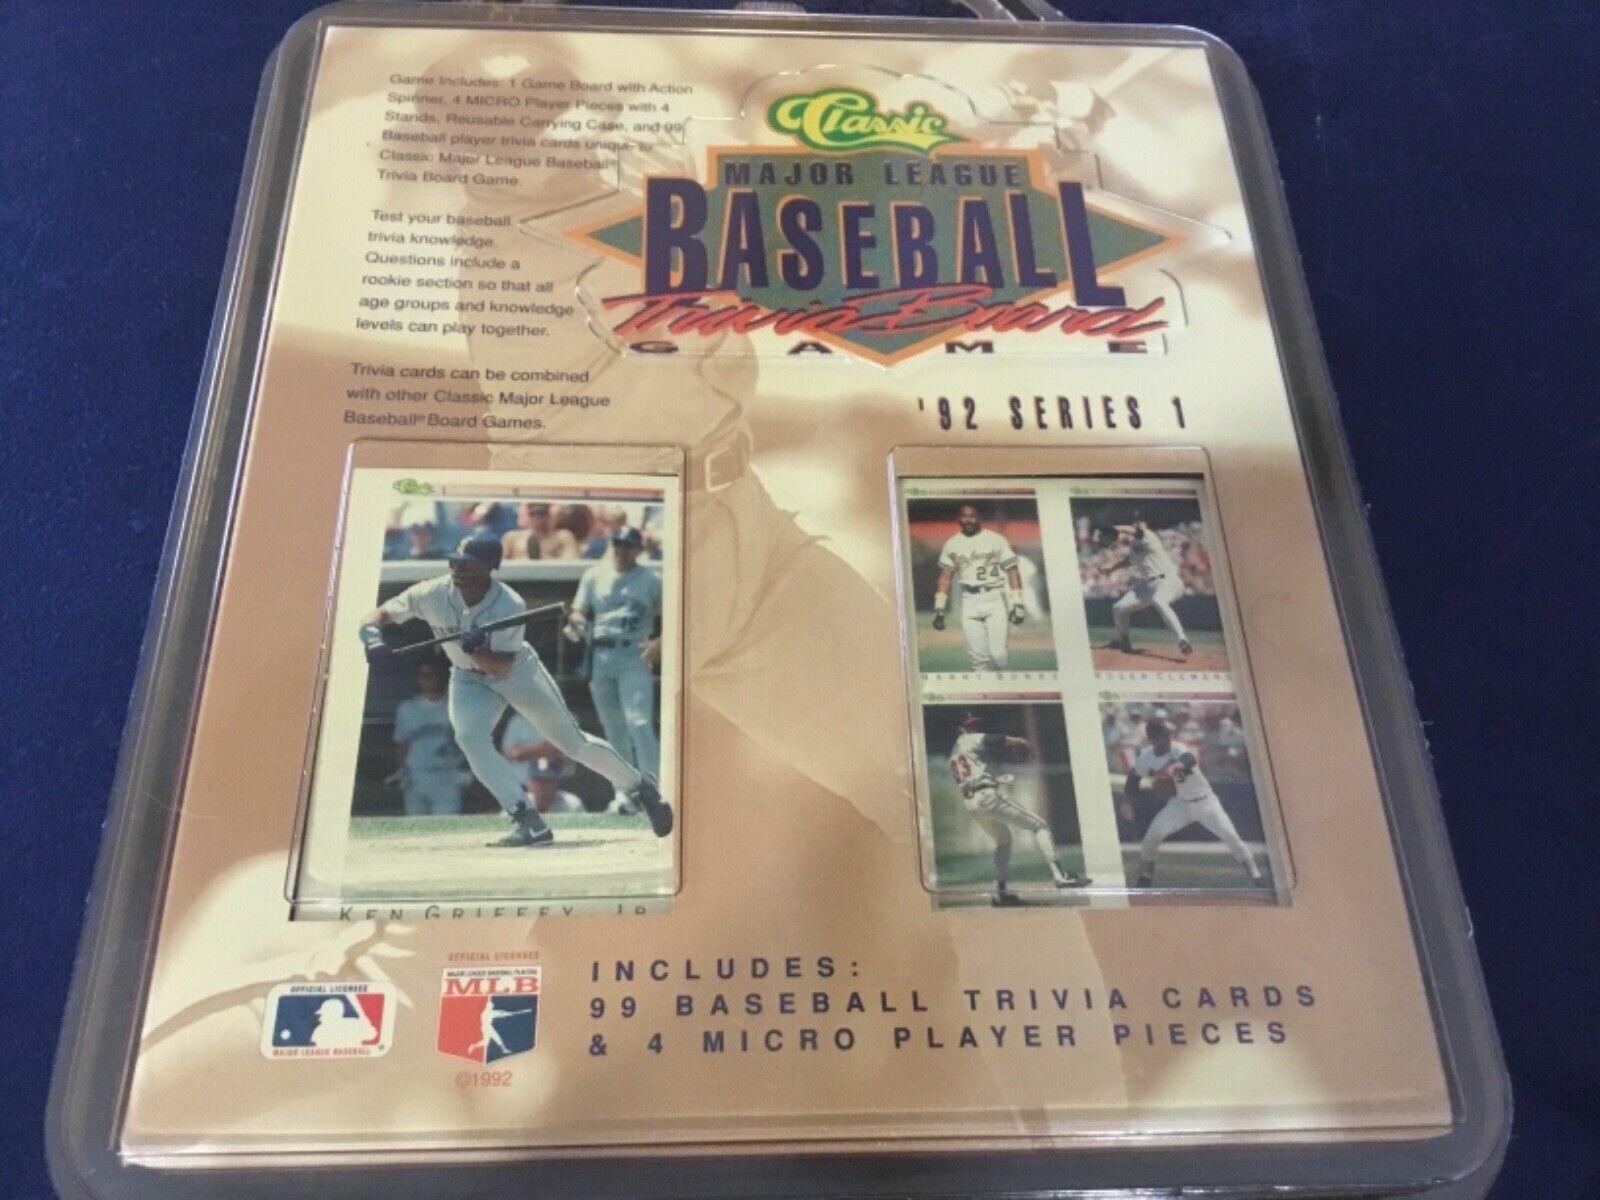 Classic Major League Baseball Board Game 92\' Series 1 